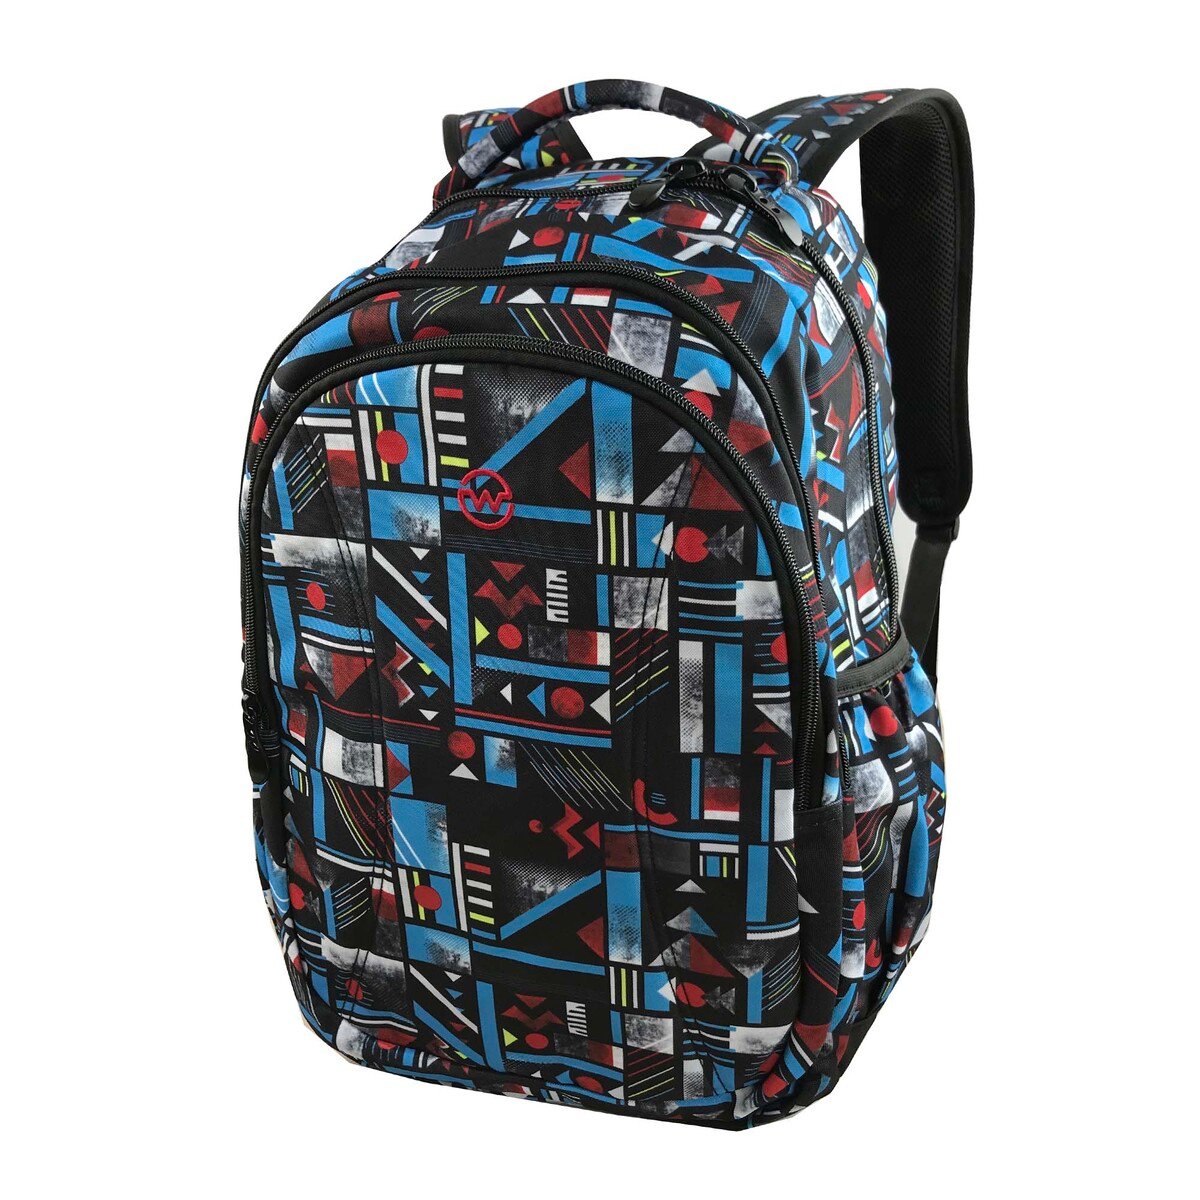 Wagon-R Printed School Backpack B2020-2 19"